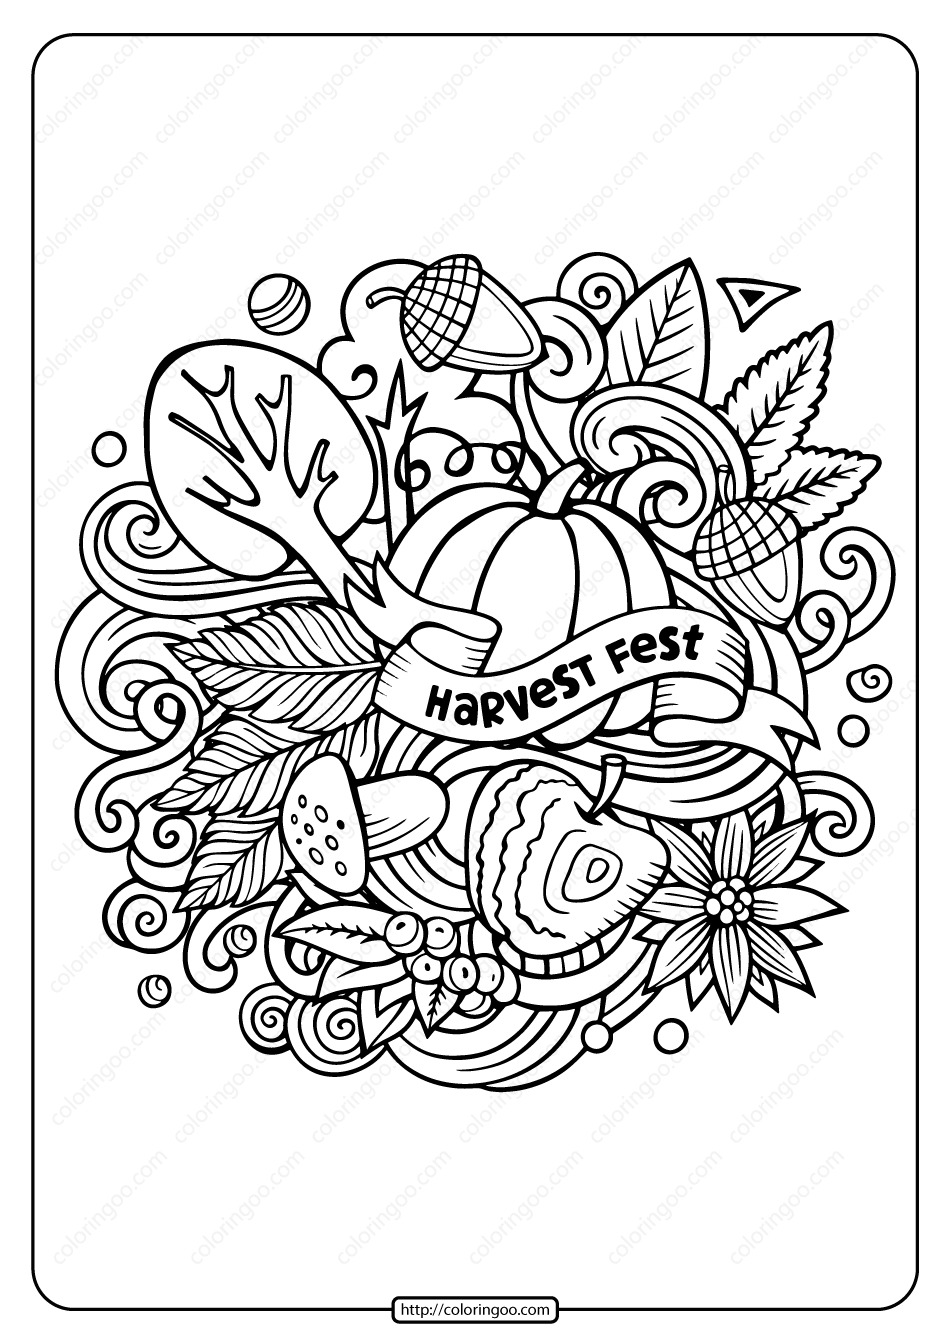 printable harvest fest pdf coloring page